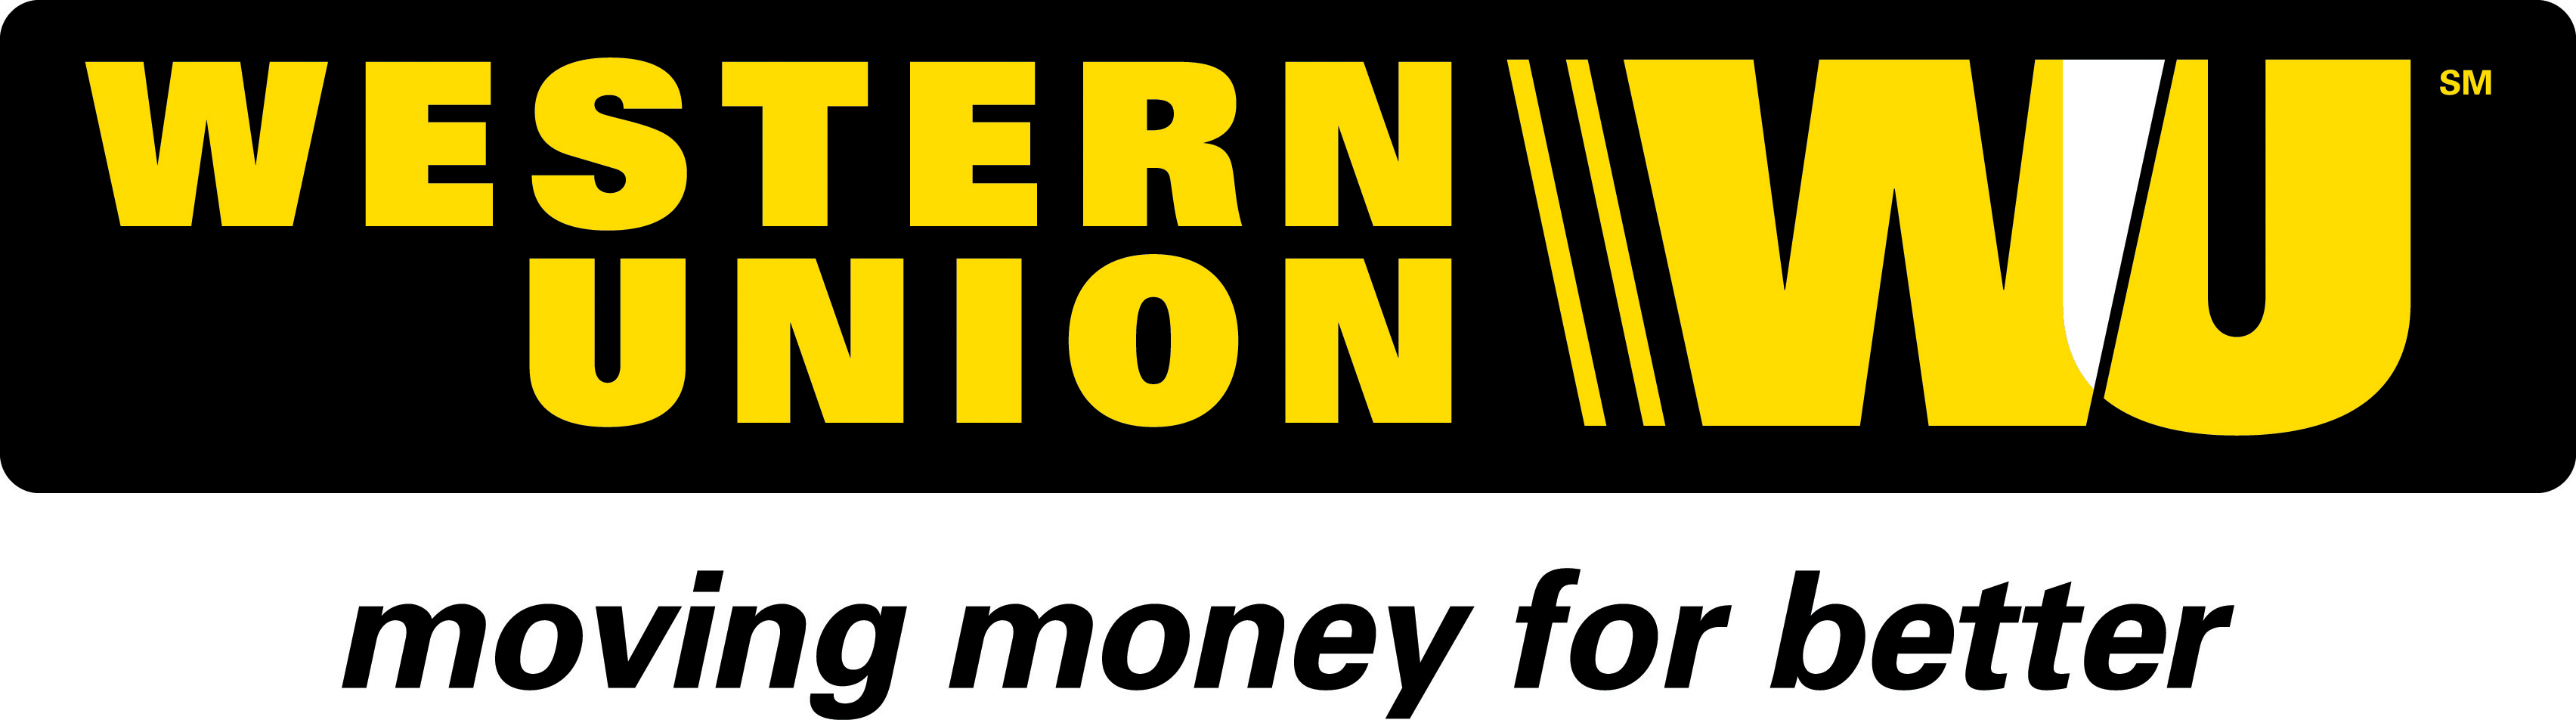 Co potrebuji na Western Union?